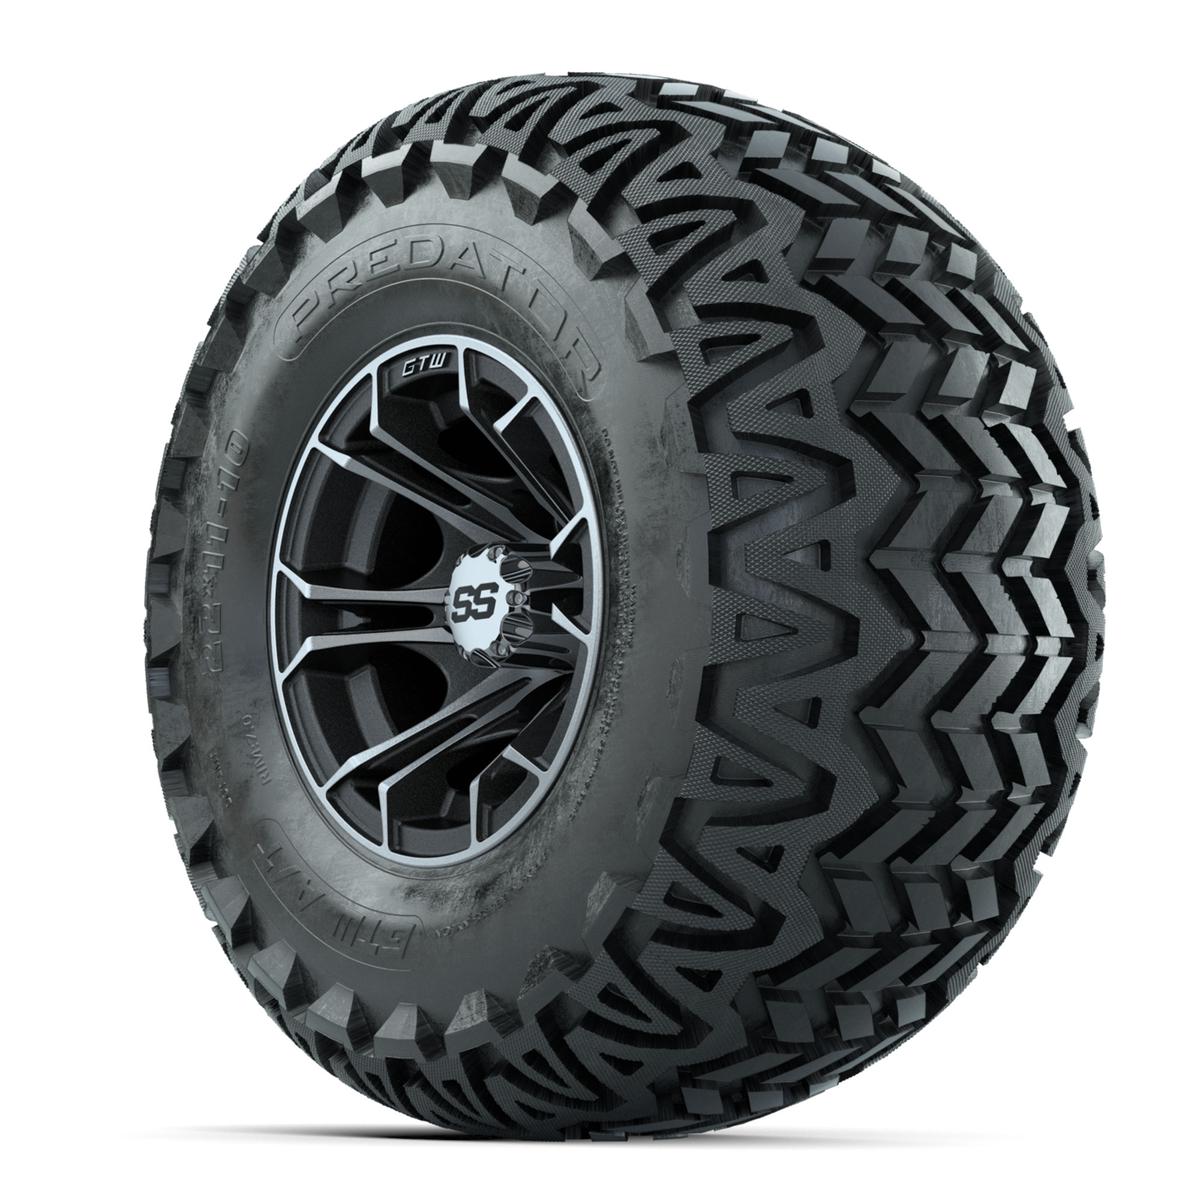 GTW Spyder Machined/Matte Grey 10 in Wheels with 22x11-10 Predator All Terrain Tires – Full Set